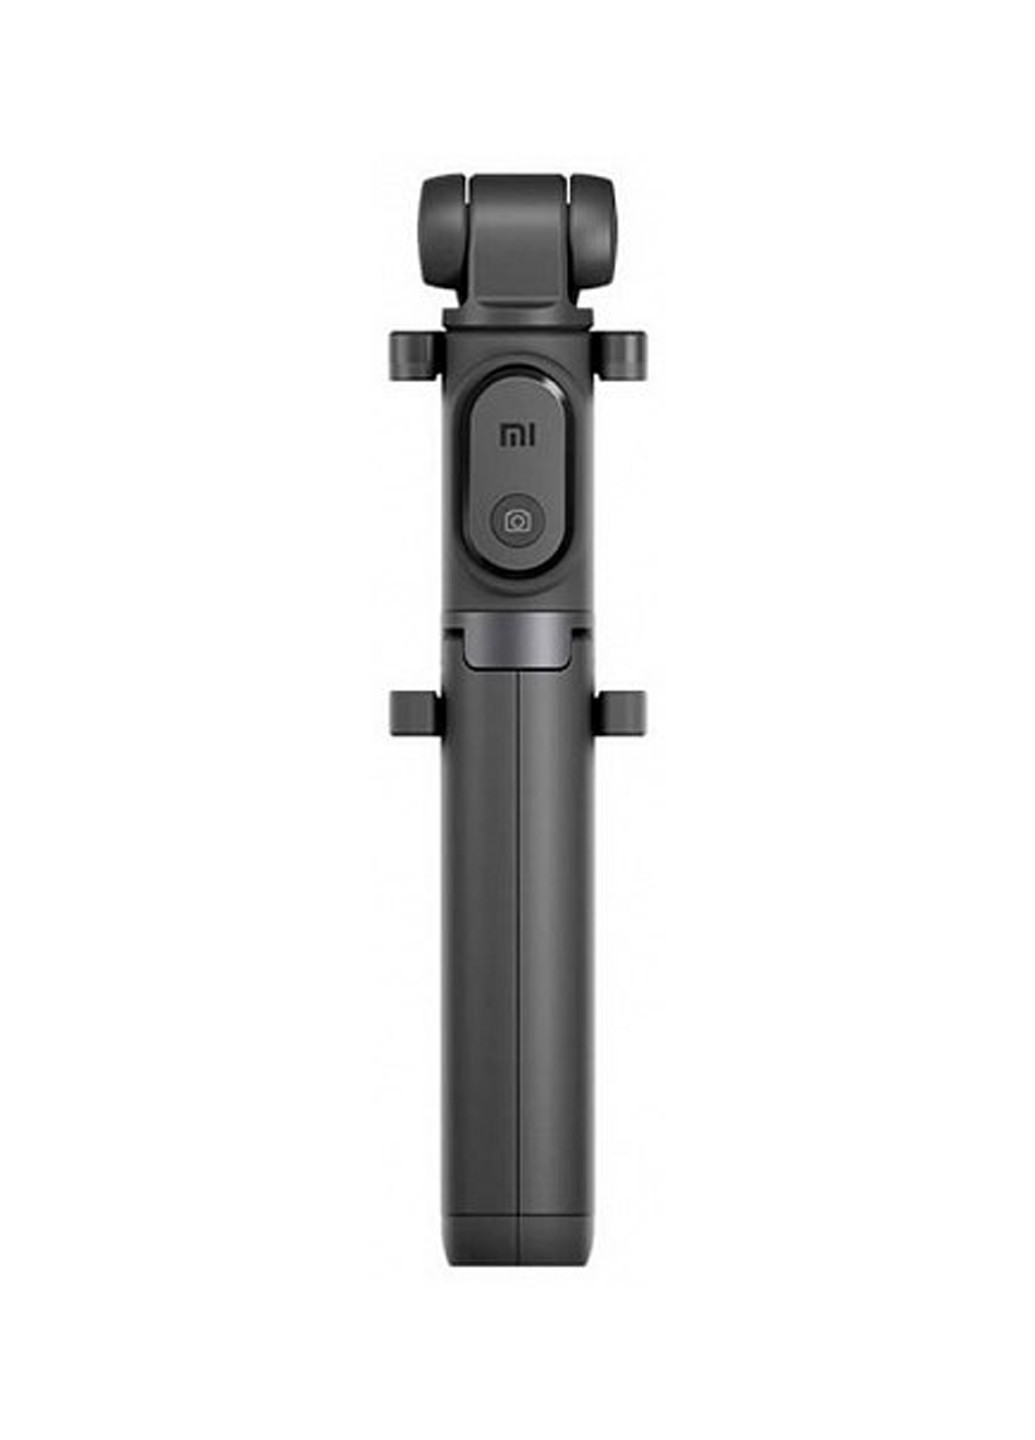 Монопод для Селфі Mi Selfie Stick Tripod Black (FBA4053CN / FBA4070US) Xiaomi mi selfie stick tripod black (fba4053cn/fba4070us) (139062655)